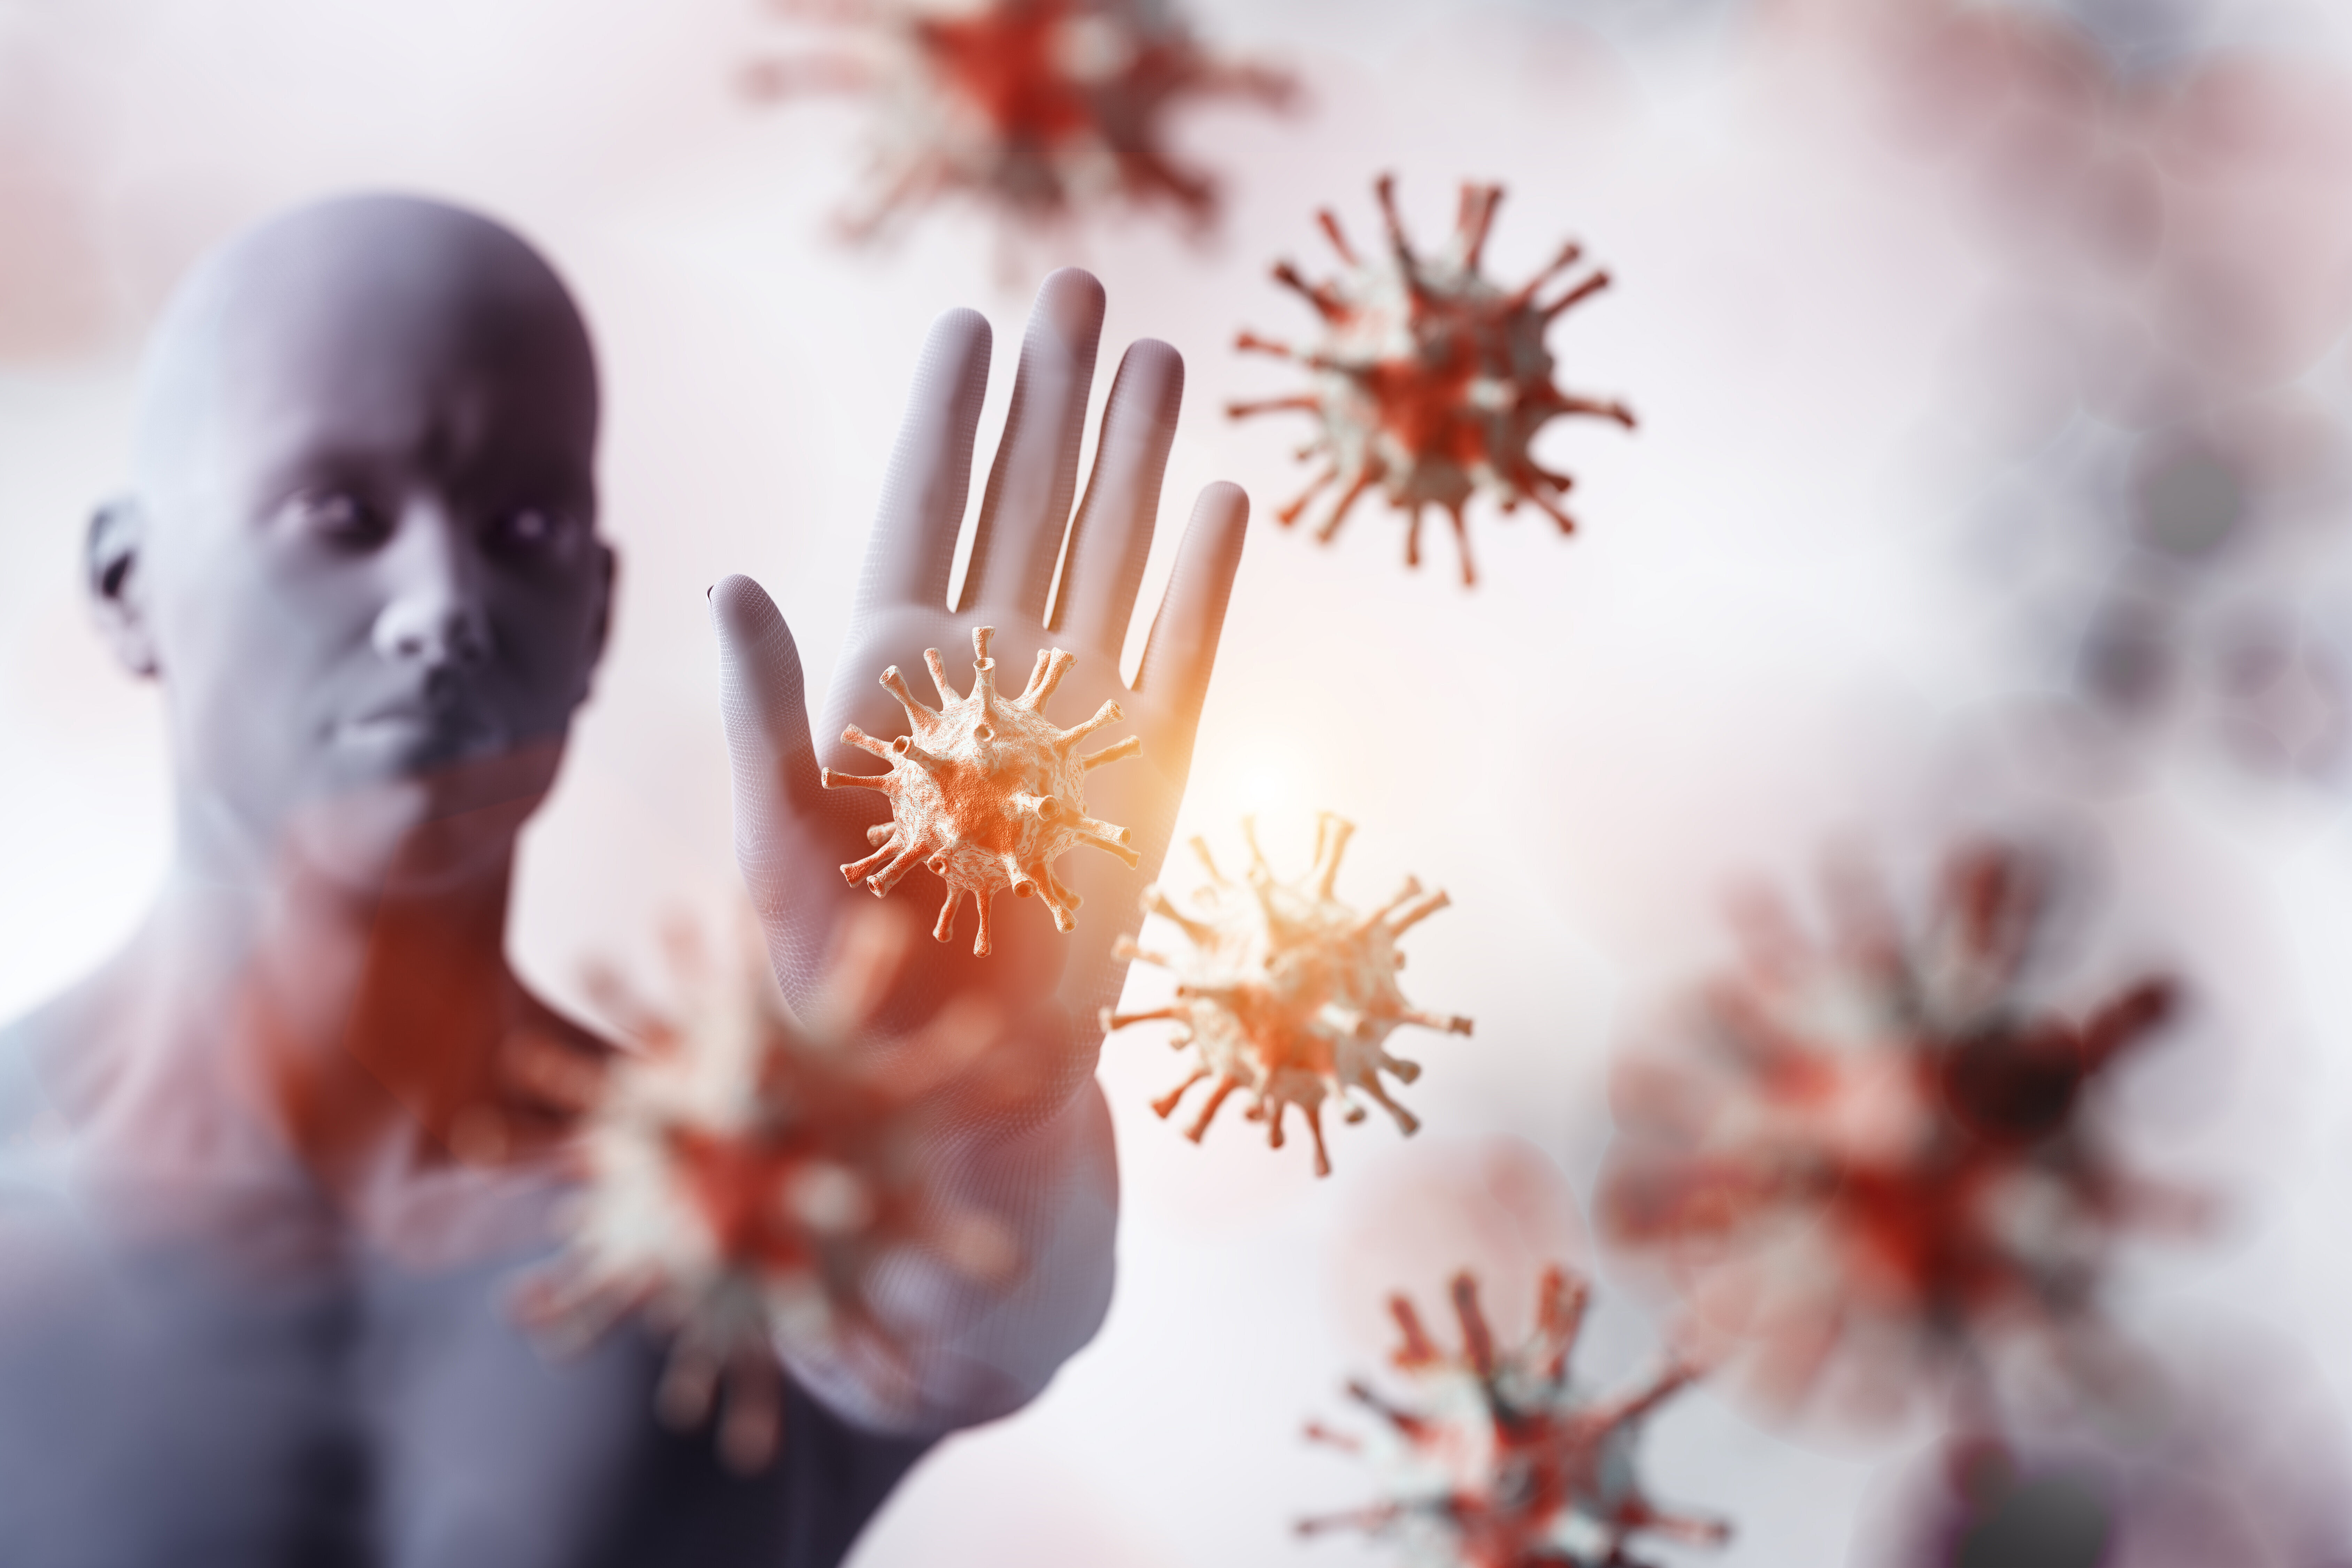 Symbolic image defense against viruses